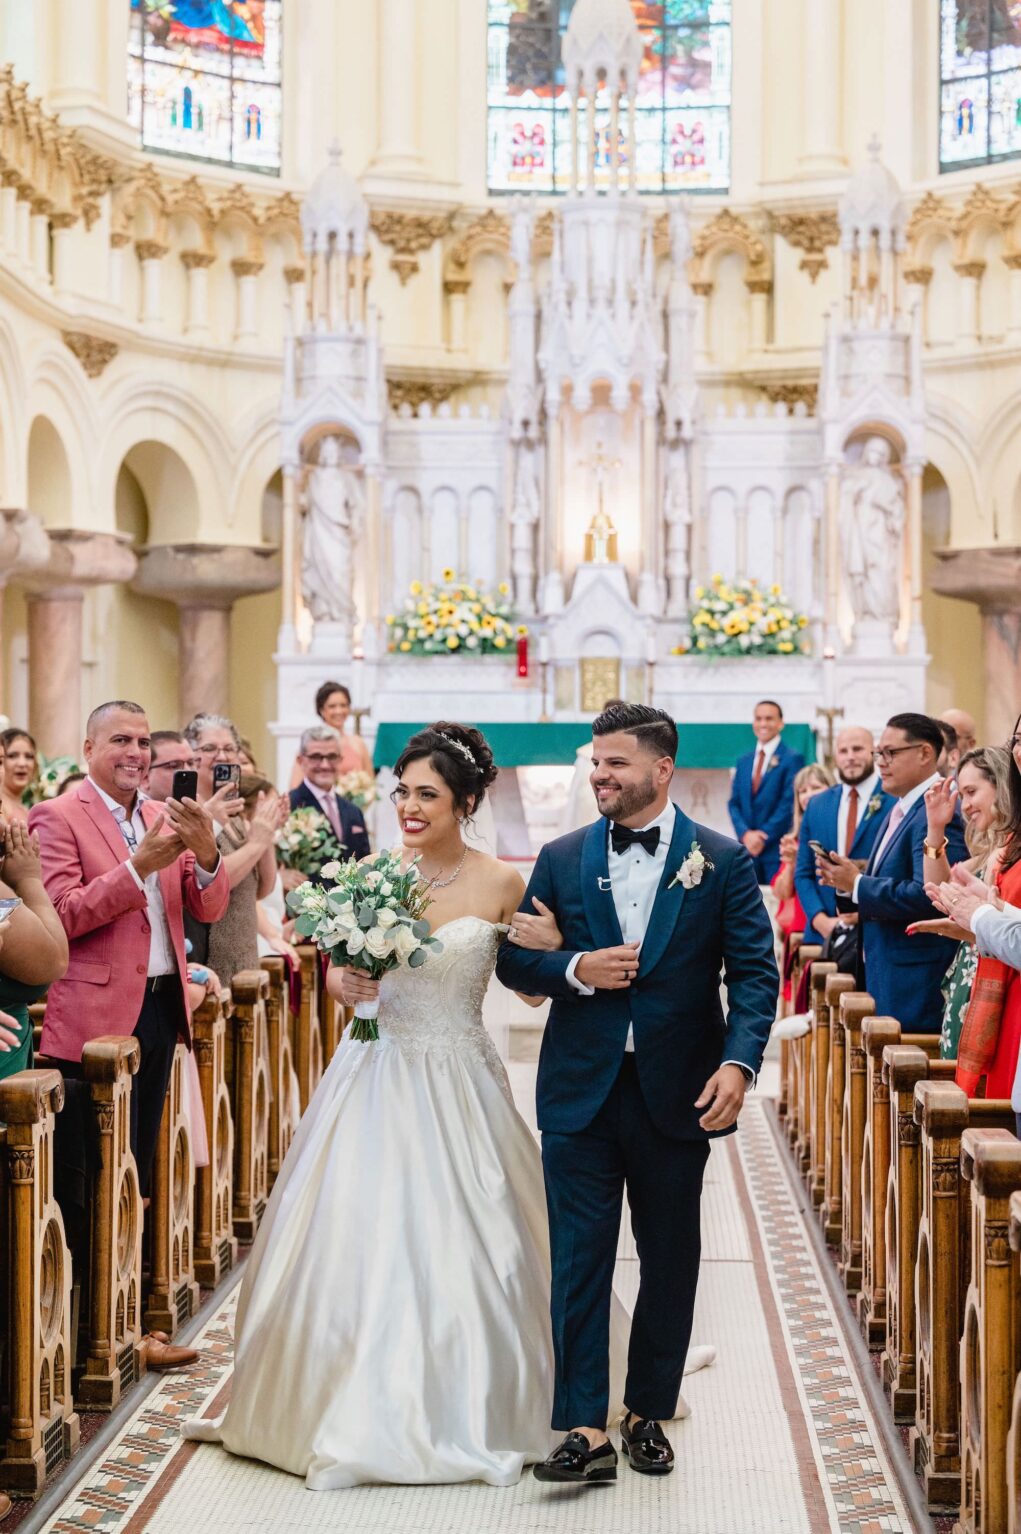 Bride and Groom Walking Down Aisle Wedding Portrait | Tampa Bay Planner Eventfull Weddings